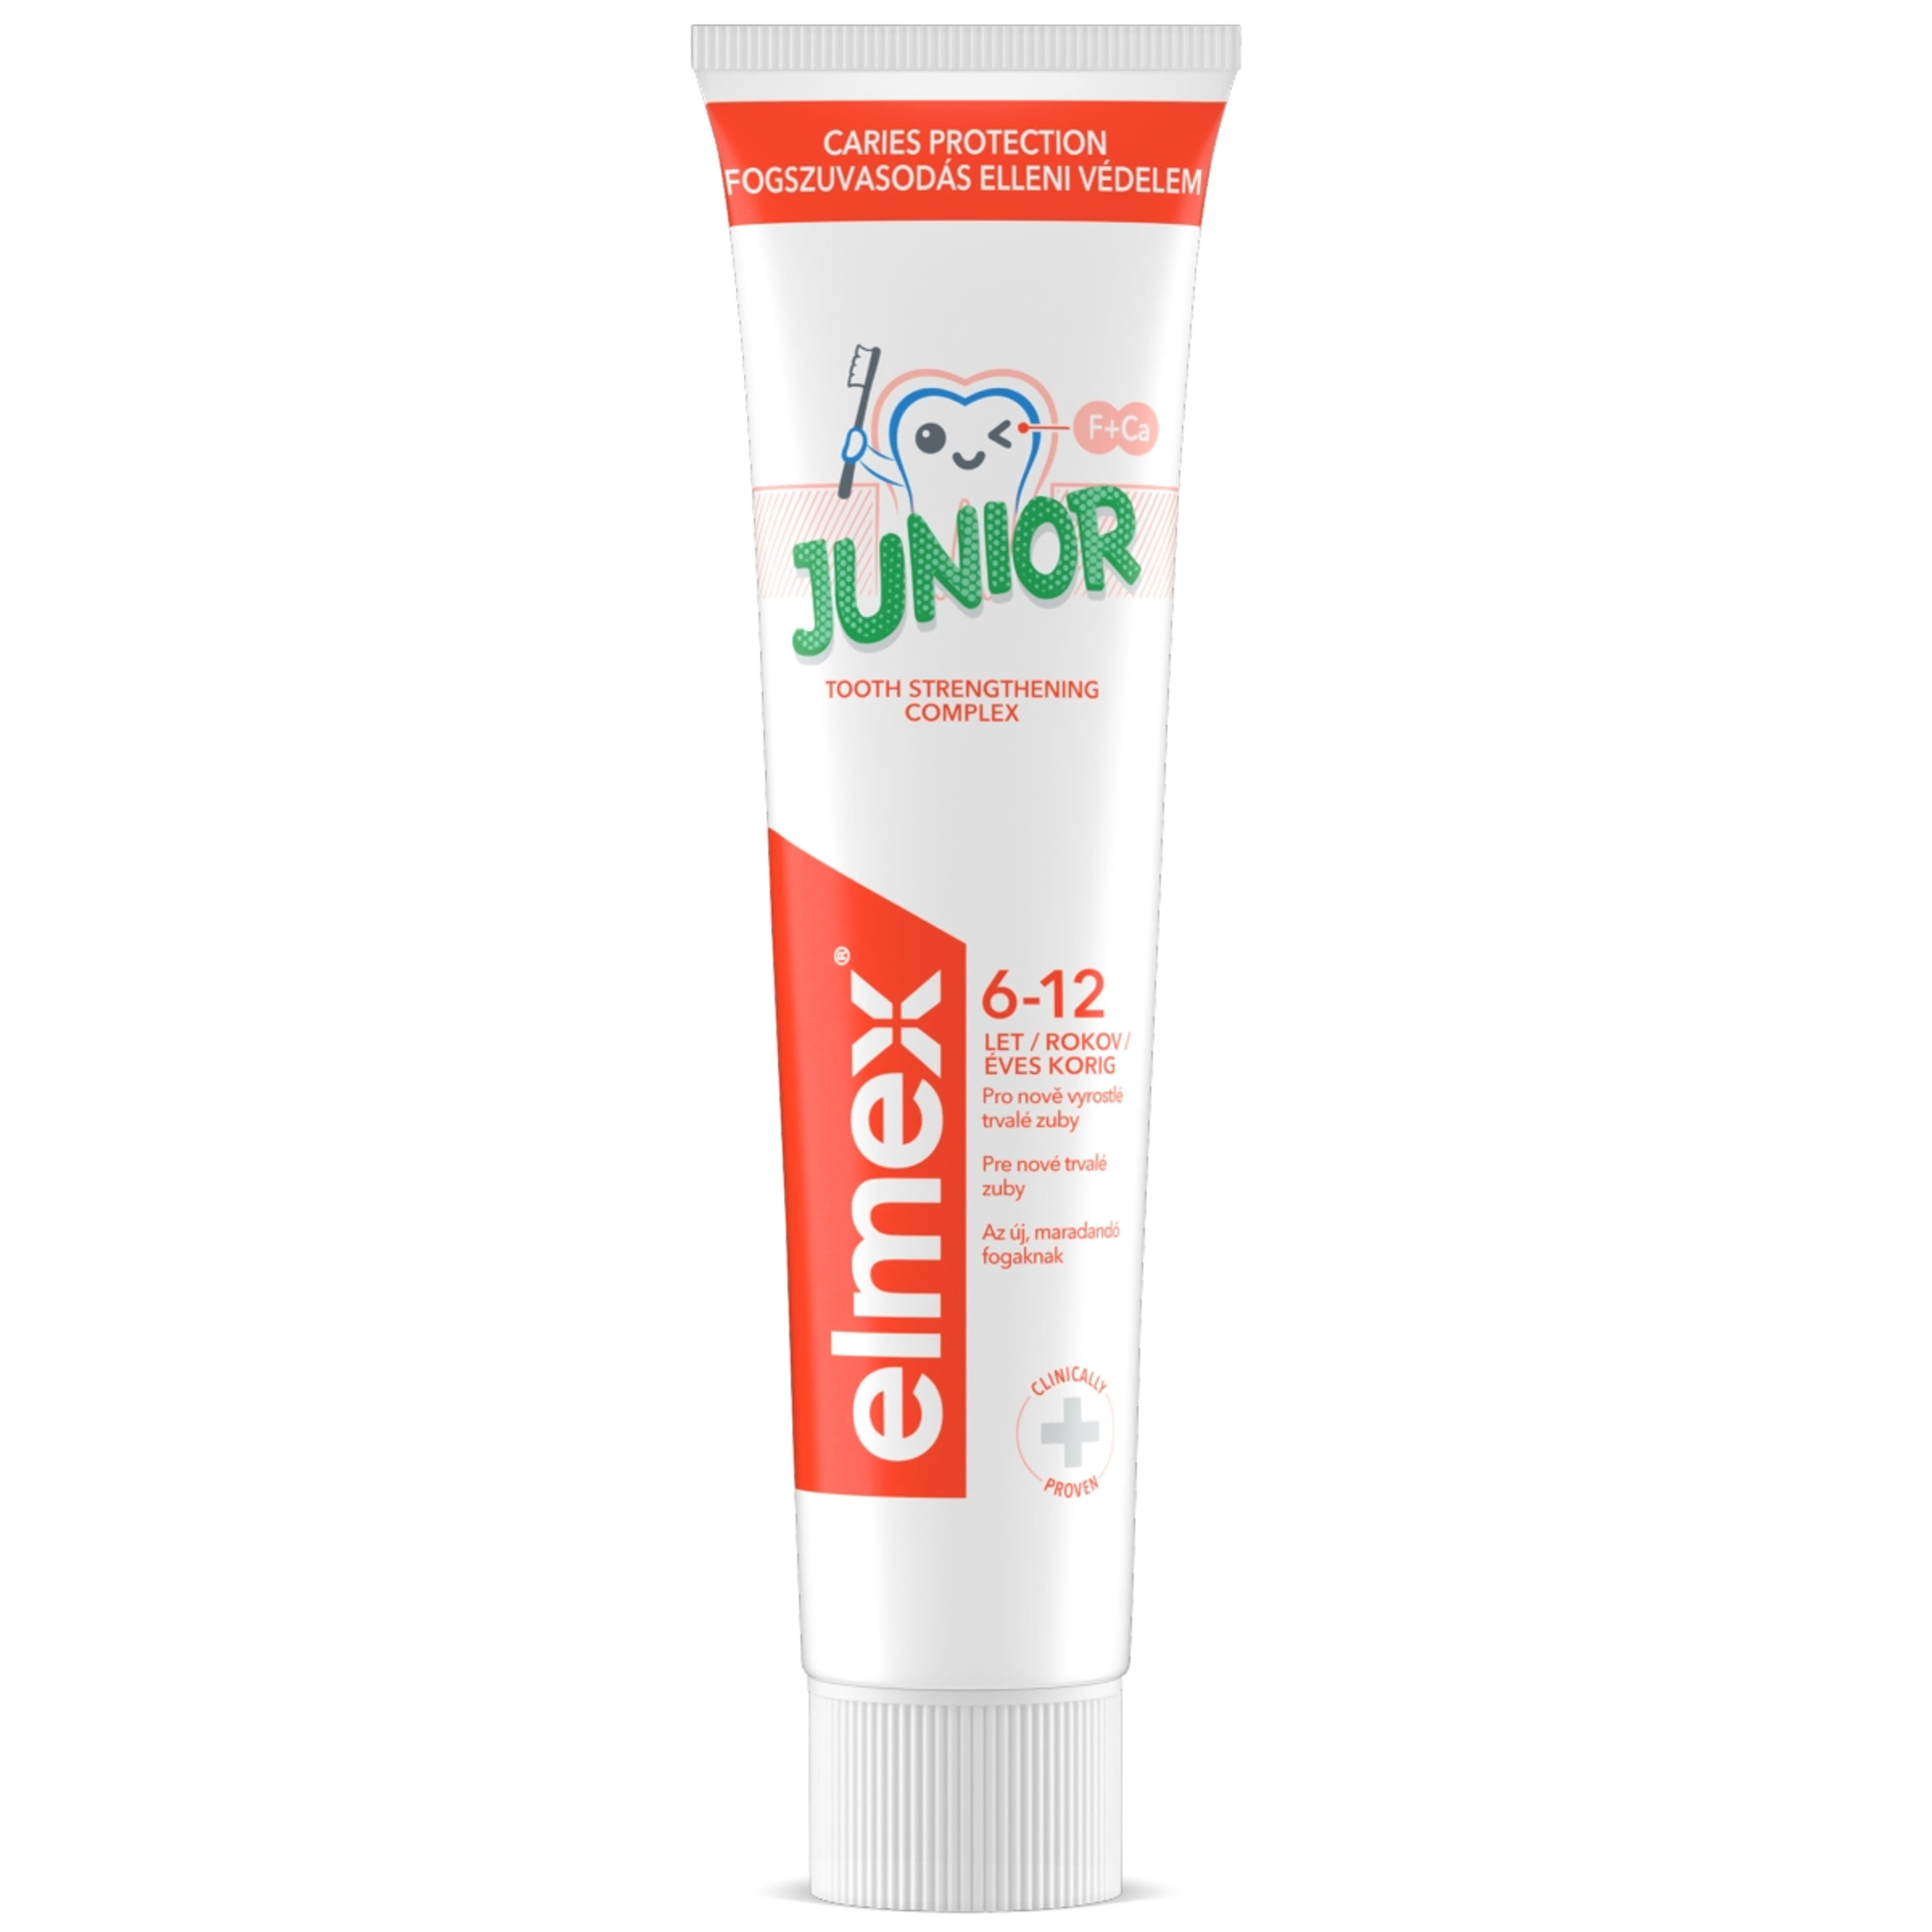 Elmex Junior fogkrém 6-12 éves korig - 75 ml-2